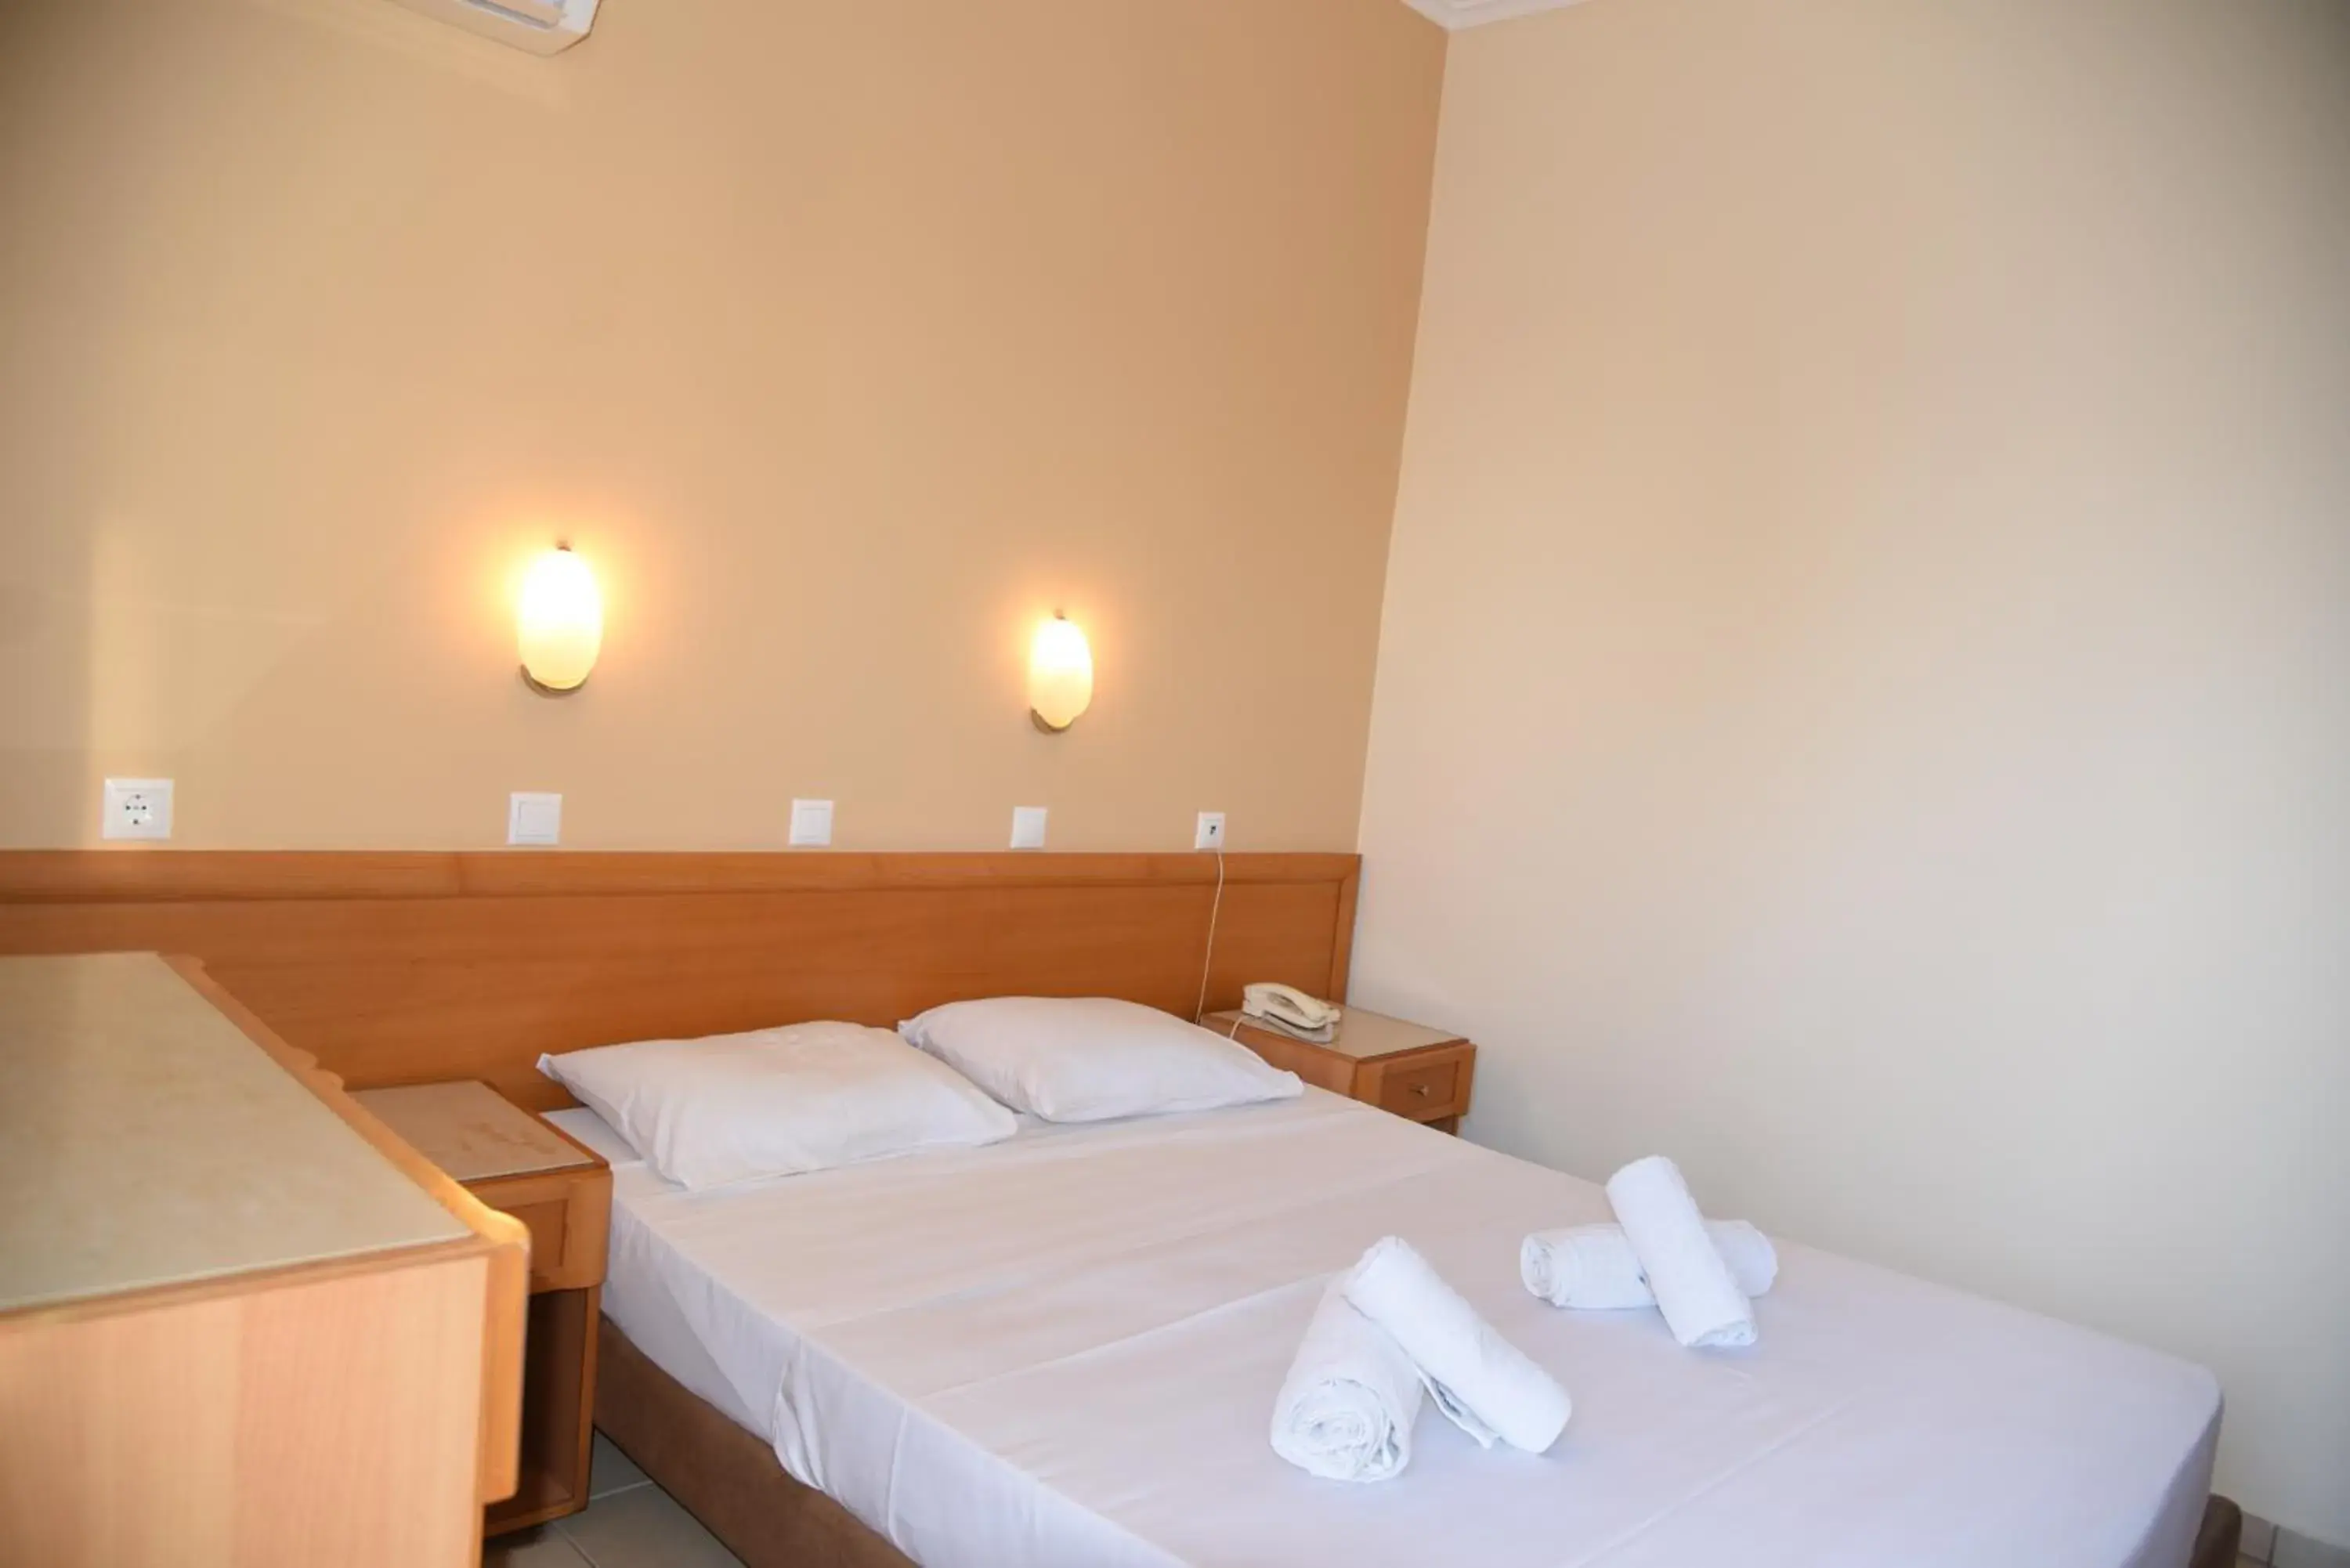 Bed, Room Photo in Marine Congo Hotel